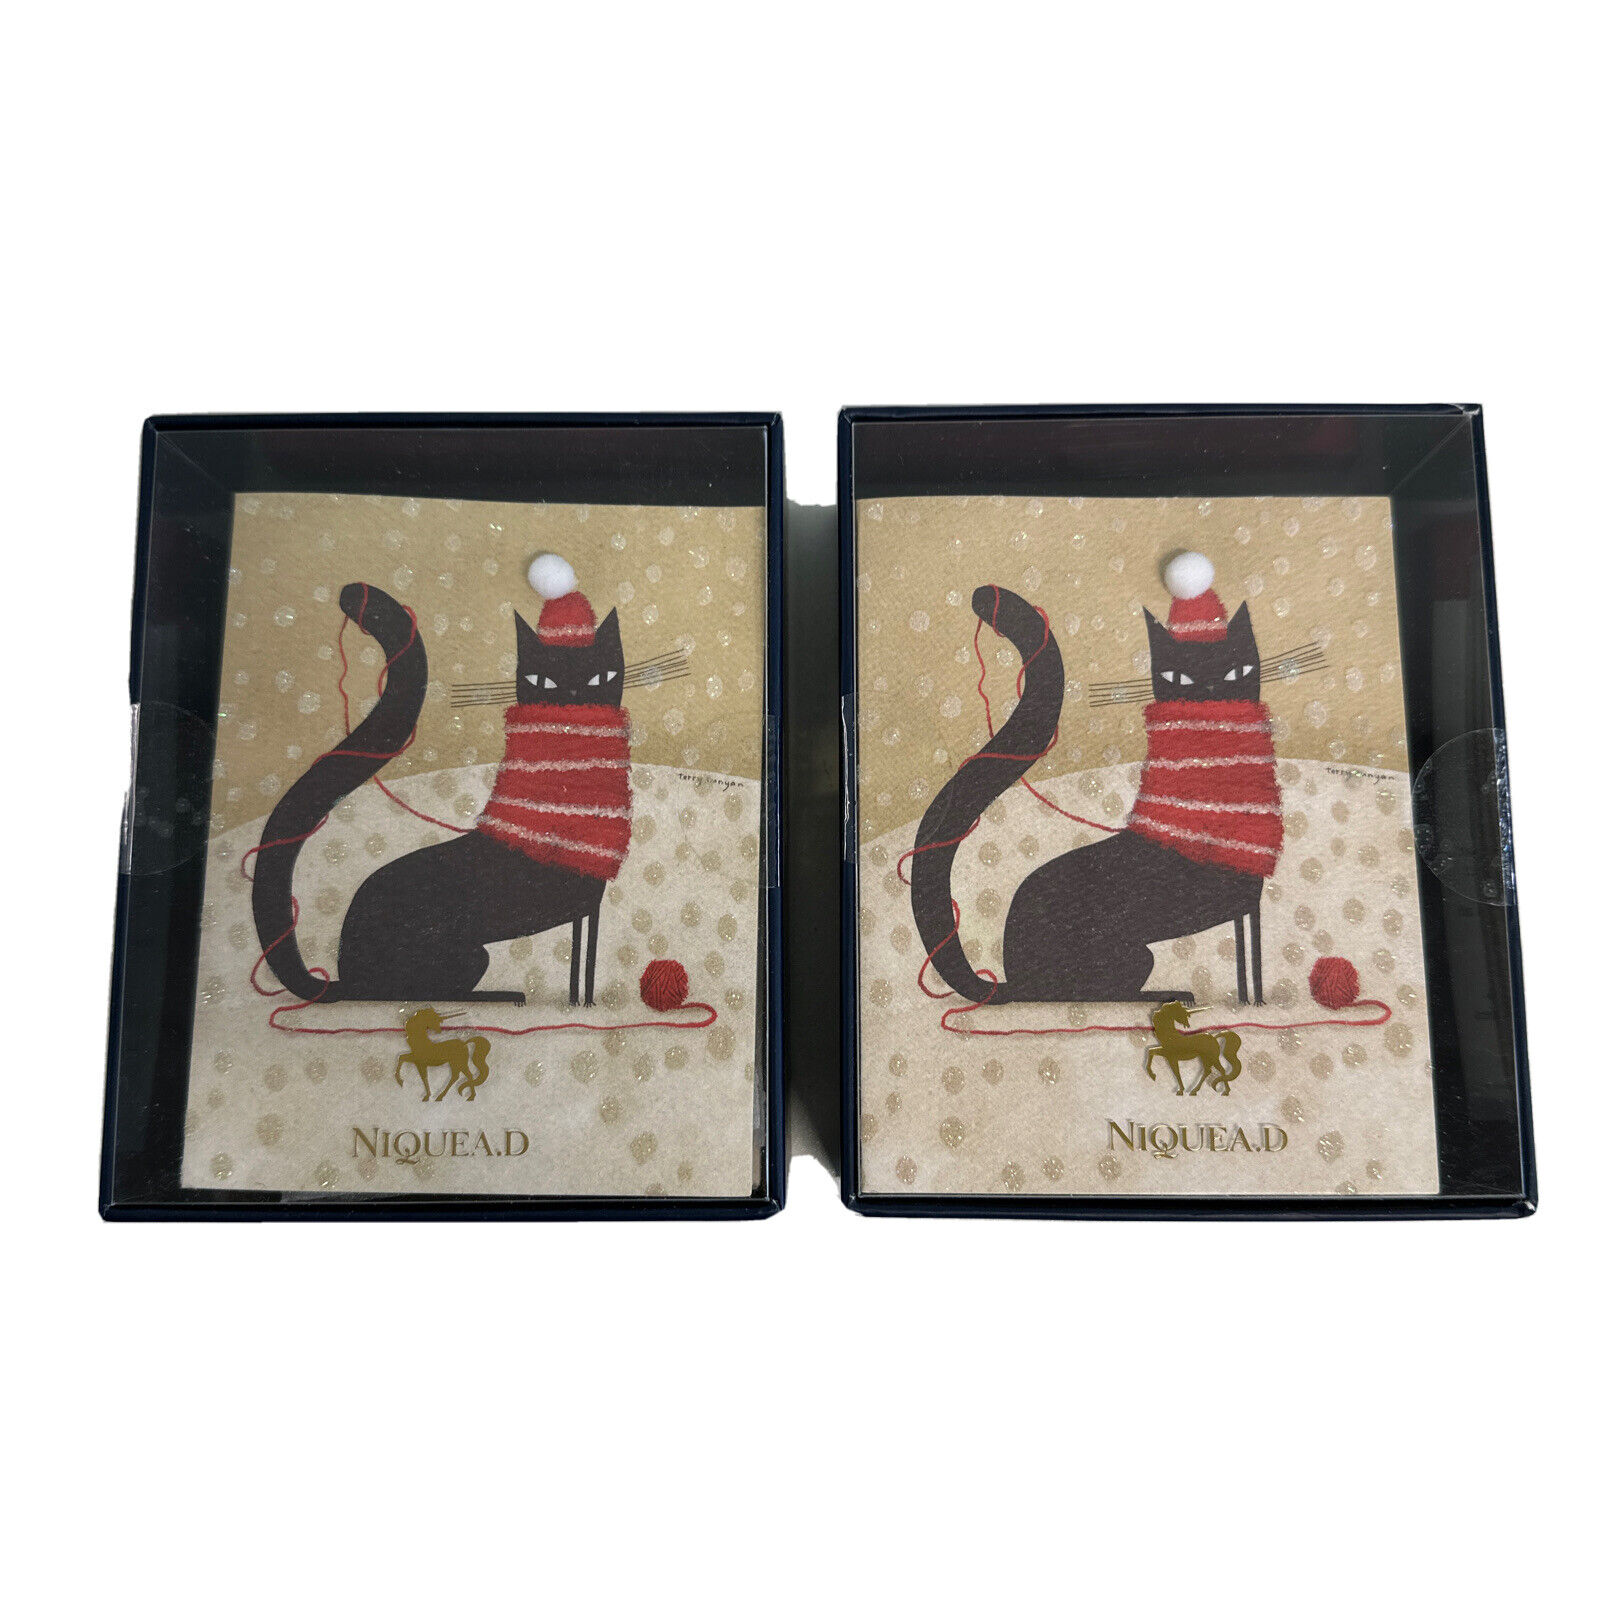 Niquea.D 20 Handmade Christmas Cards 20 Lined Envelopes Cat Wrapped yarn Kitten